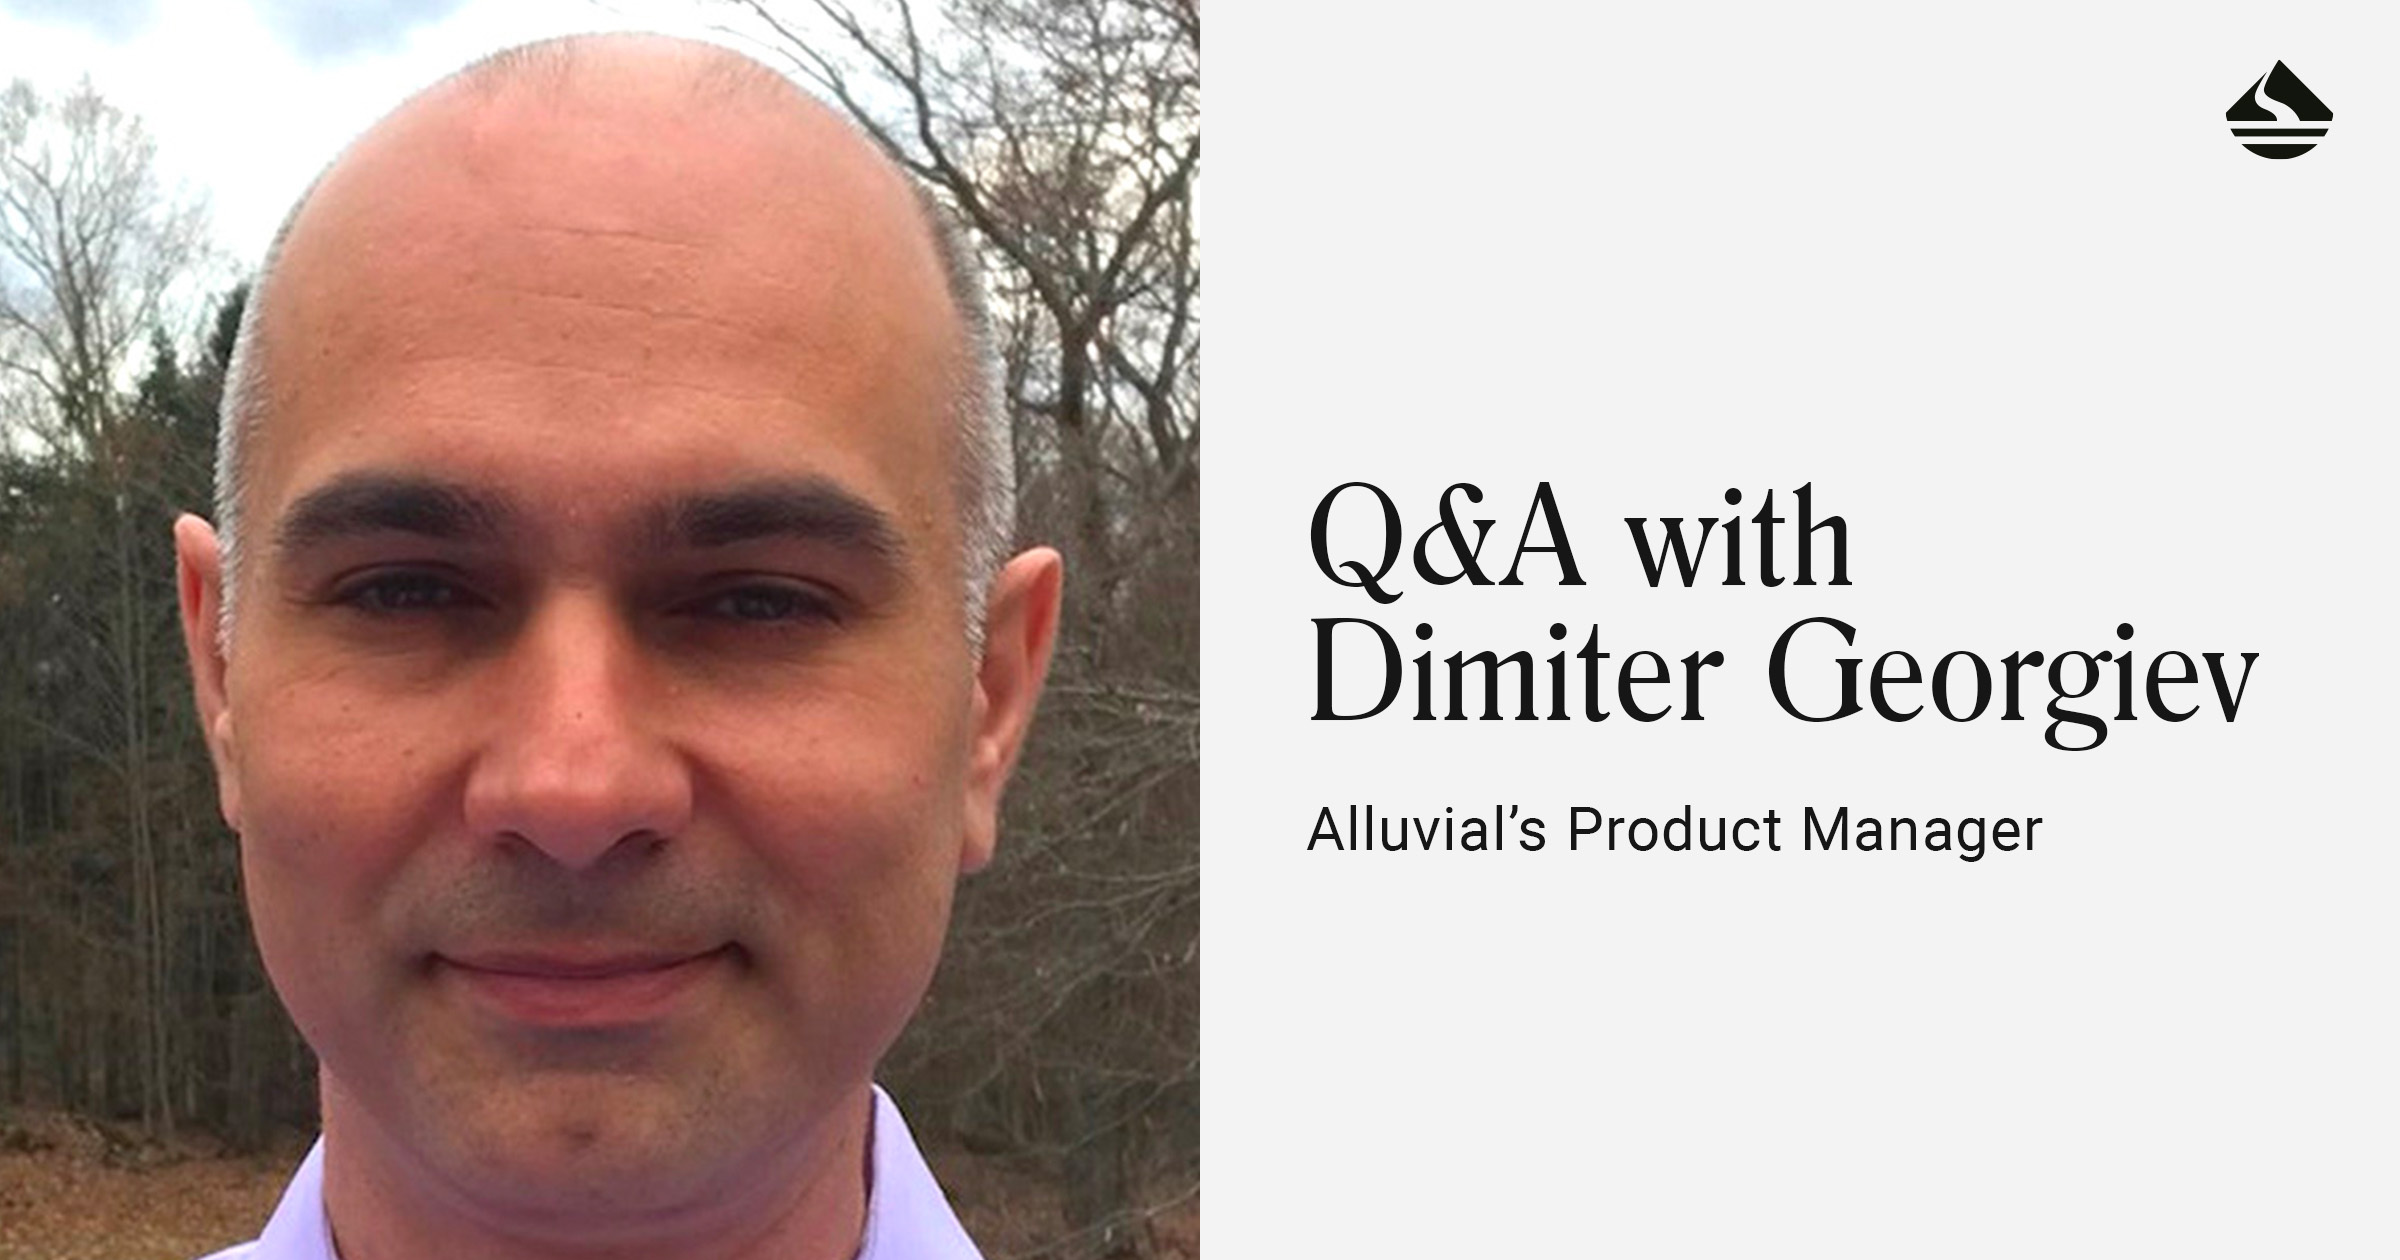 Q&A with Dimiter Georgiev, Alluvial